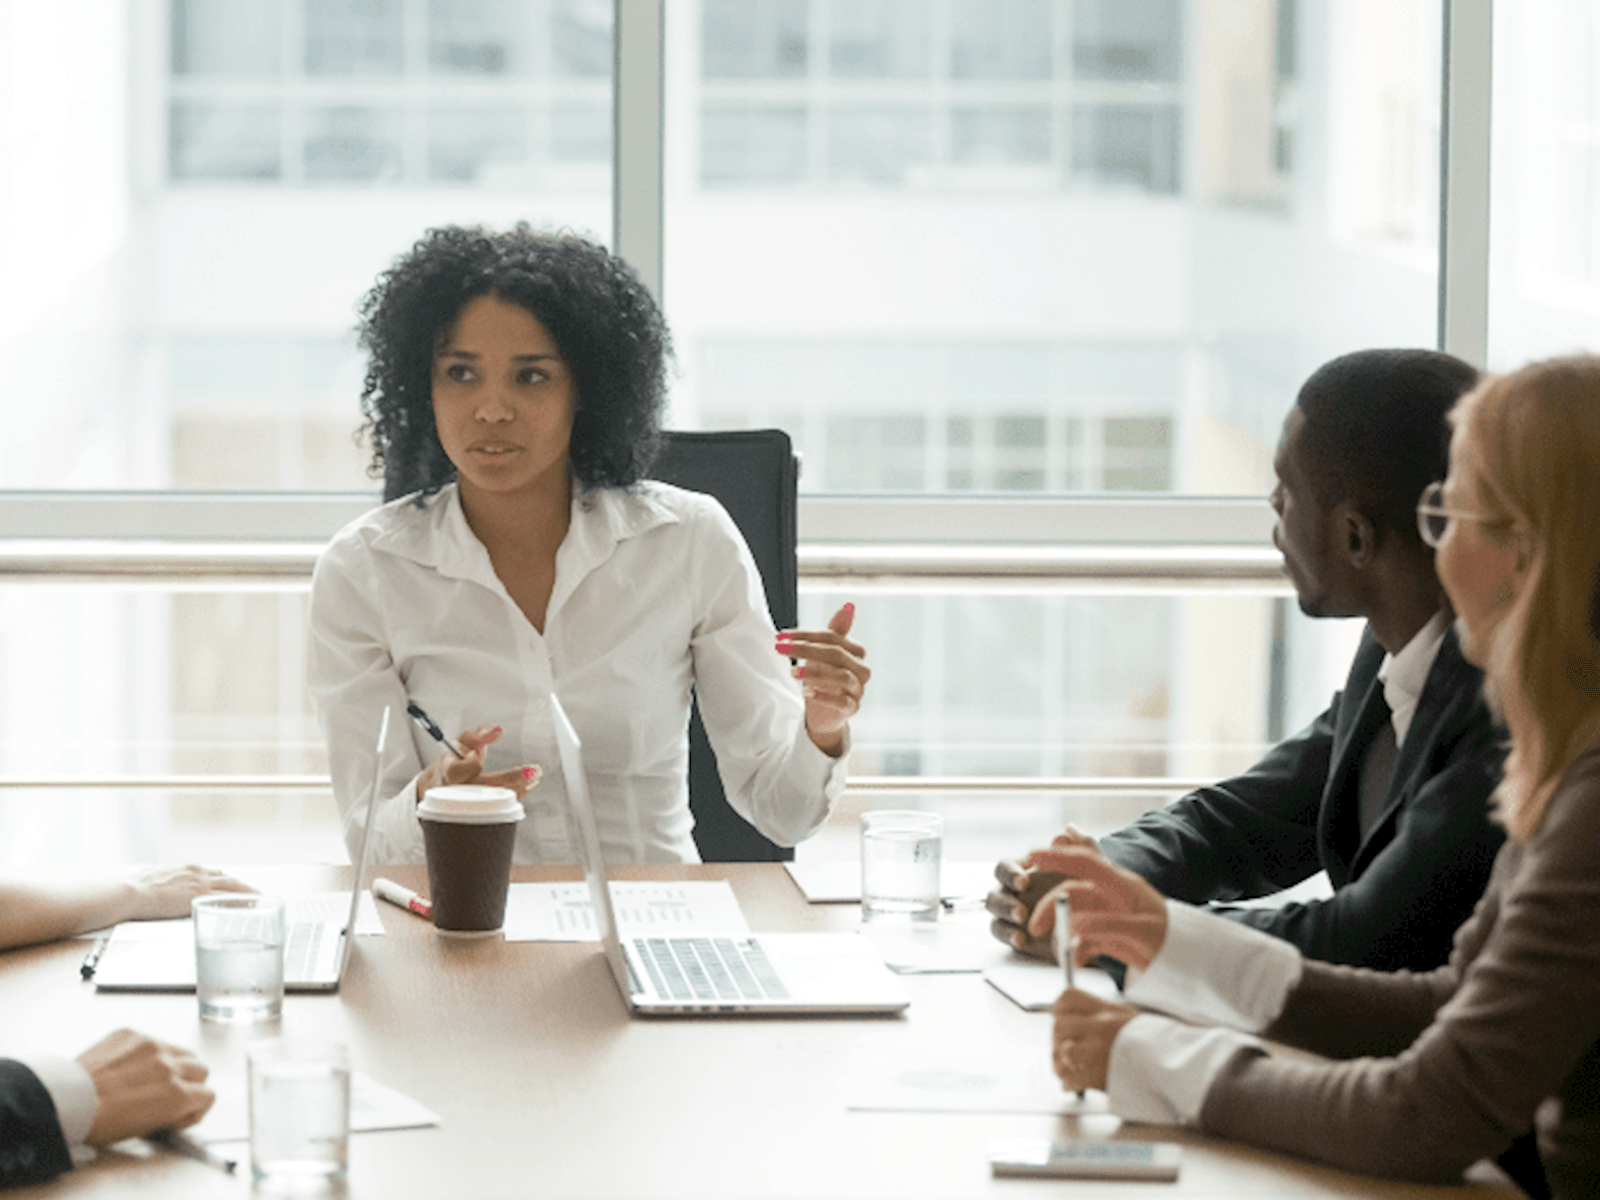 Black woman chairing meeting